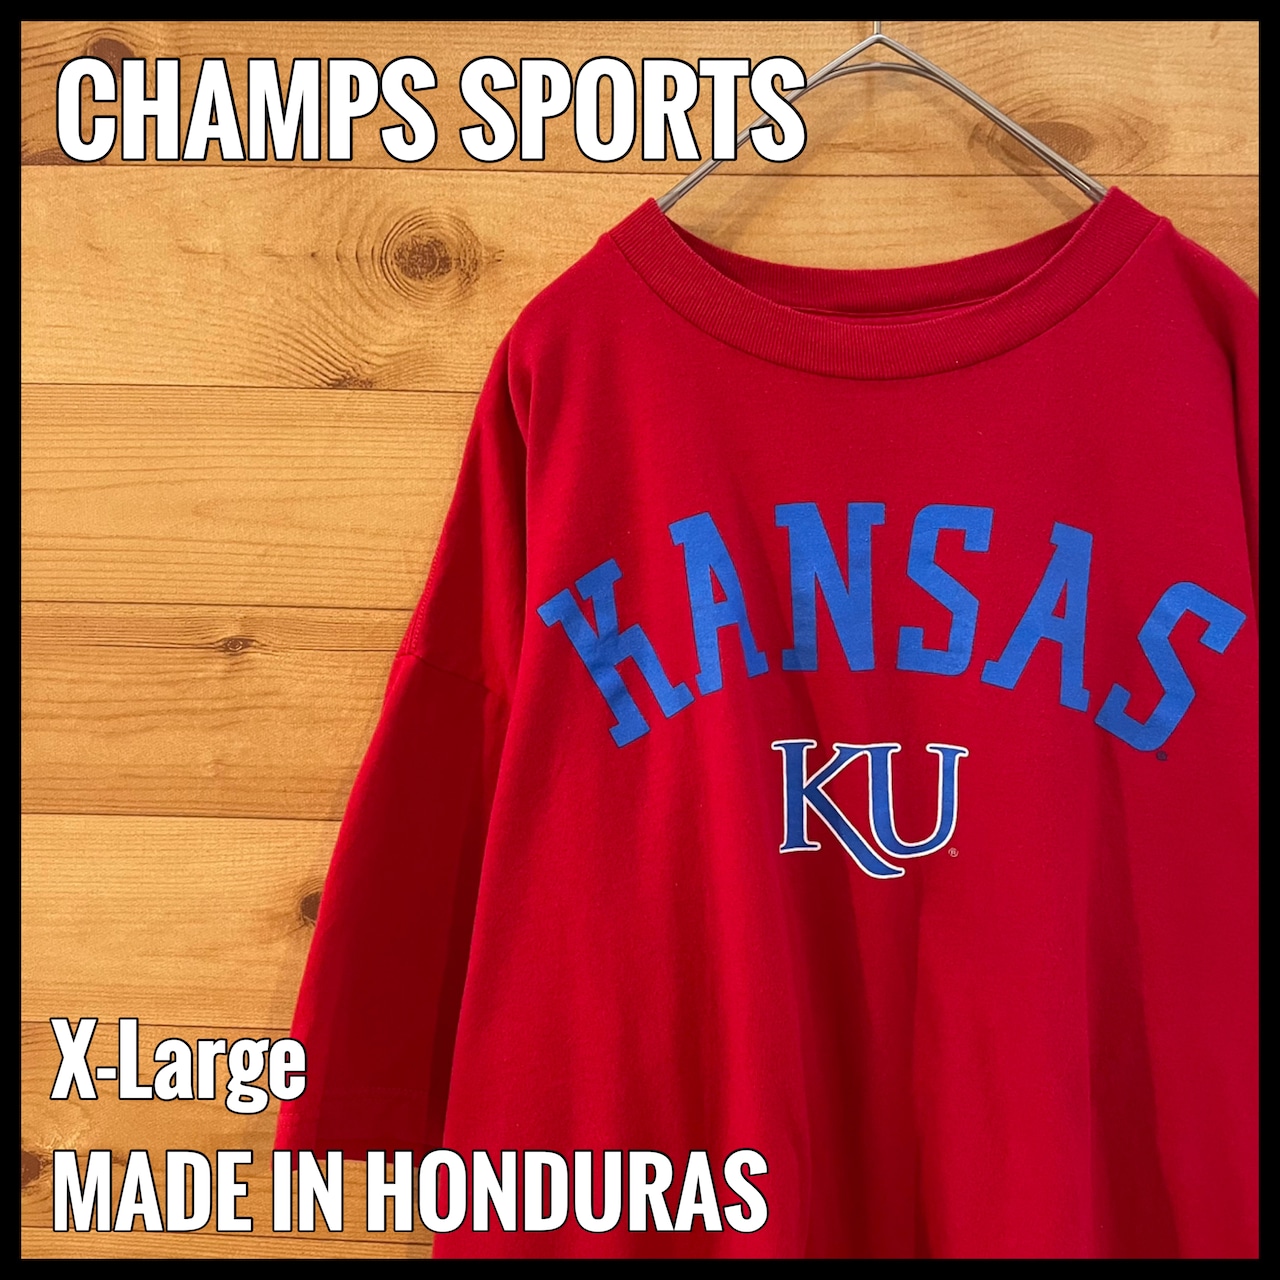 【CHAMPS SPORTS】カレッジ カンザス大学 アーチロゴ Tシャツ KU XL ビッグサイズ US古着 アメリカ古着